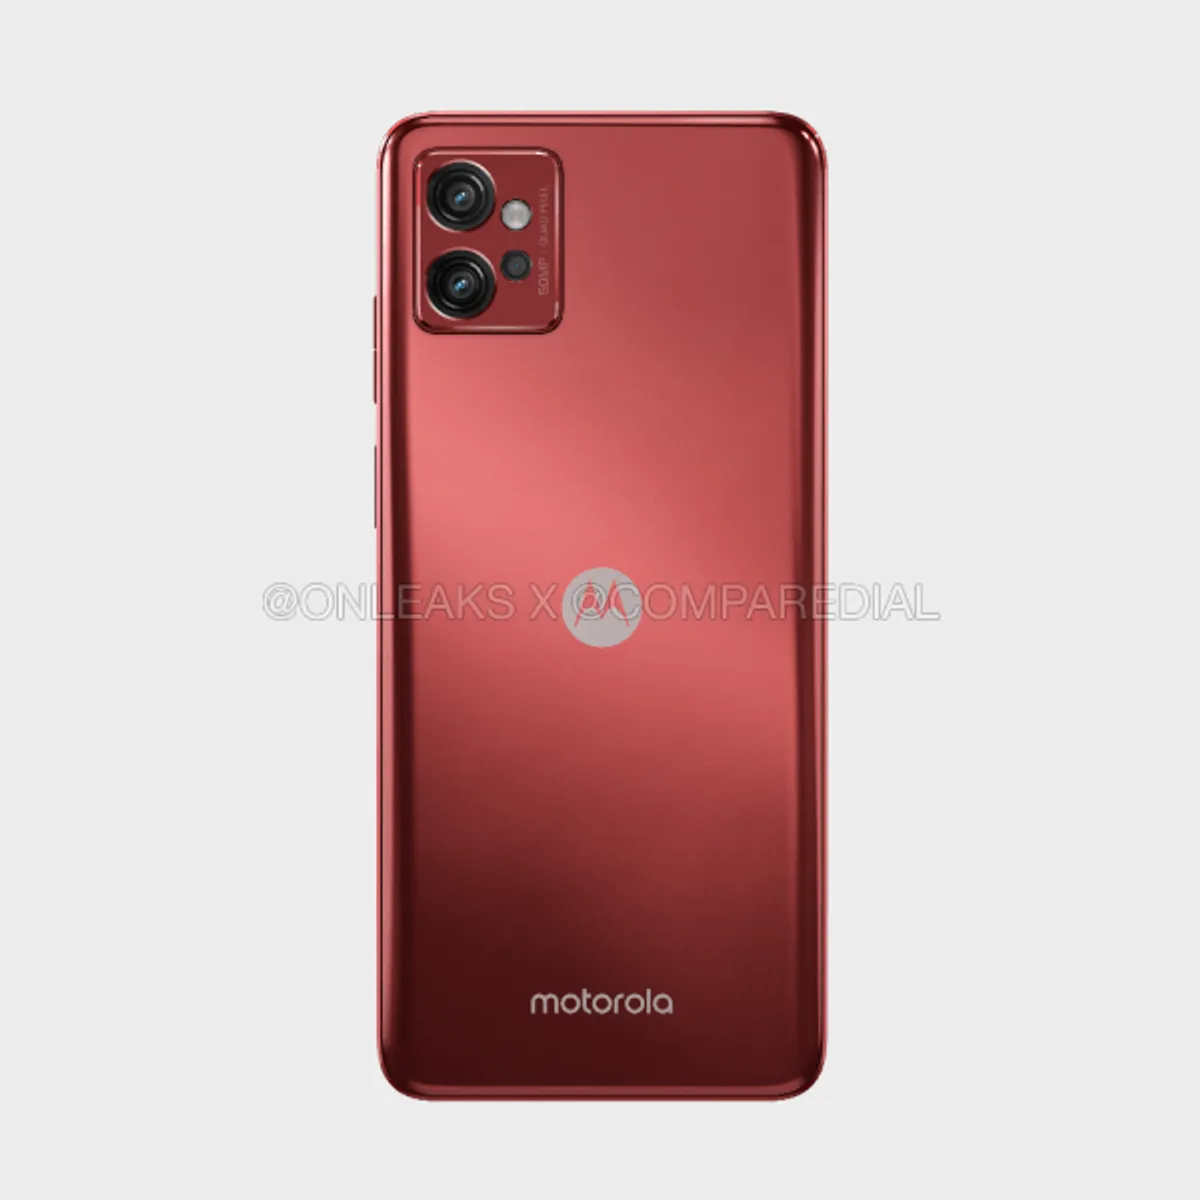  Motorola Moto G32 в двух расцветках на фото Другие устройства  - motorola_moto_g32_v_dvuh_cvetah_na_press_foto_6